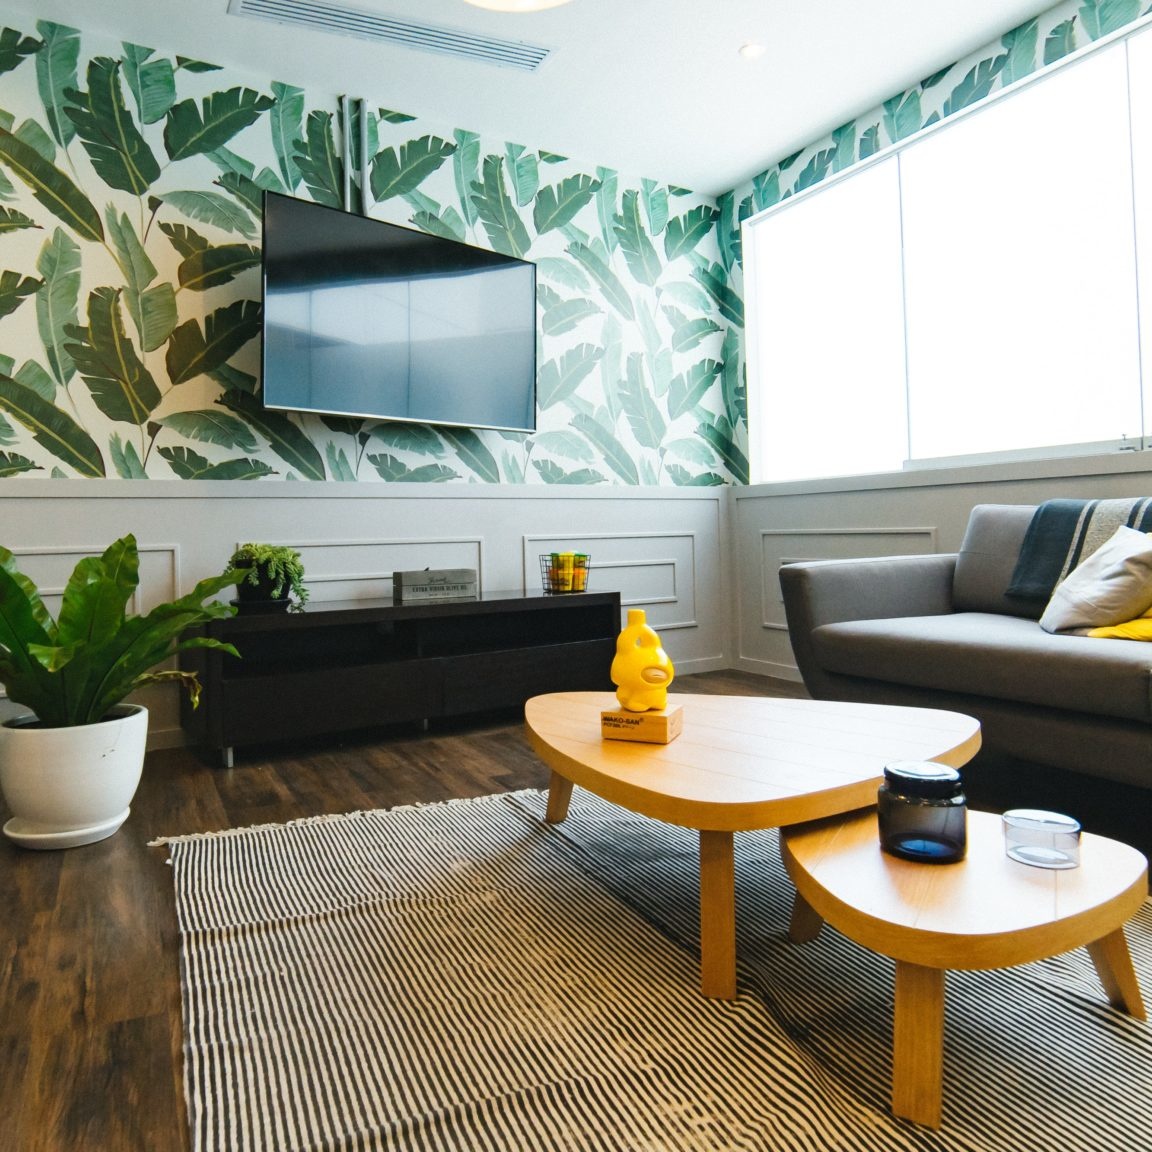 Living room interior design with decorative wallpaper